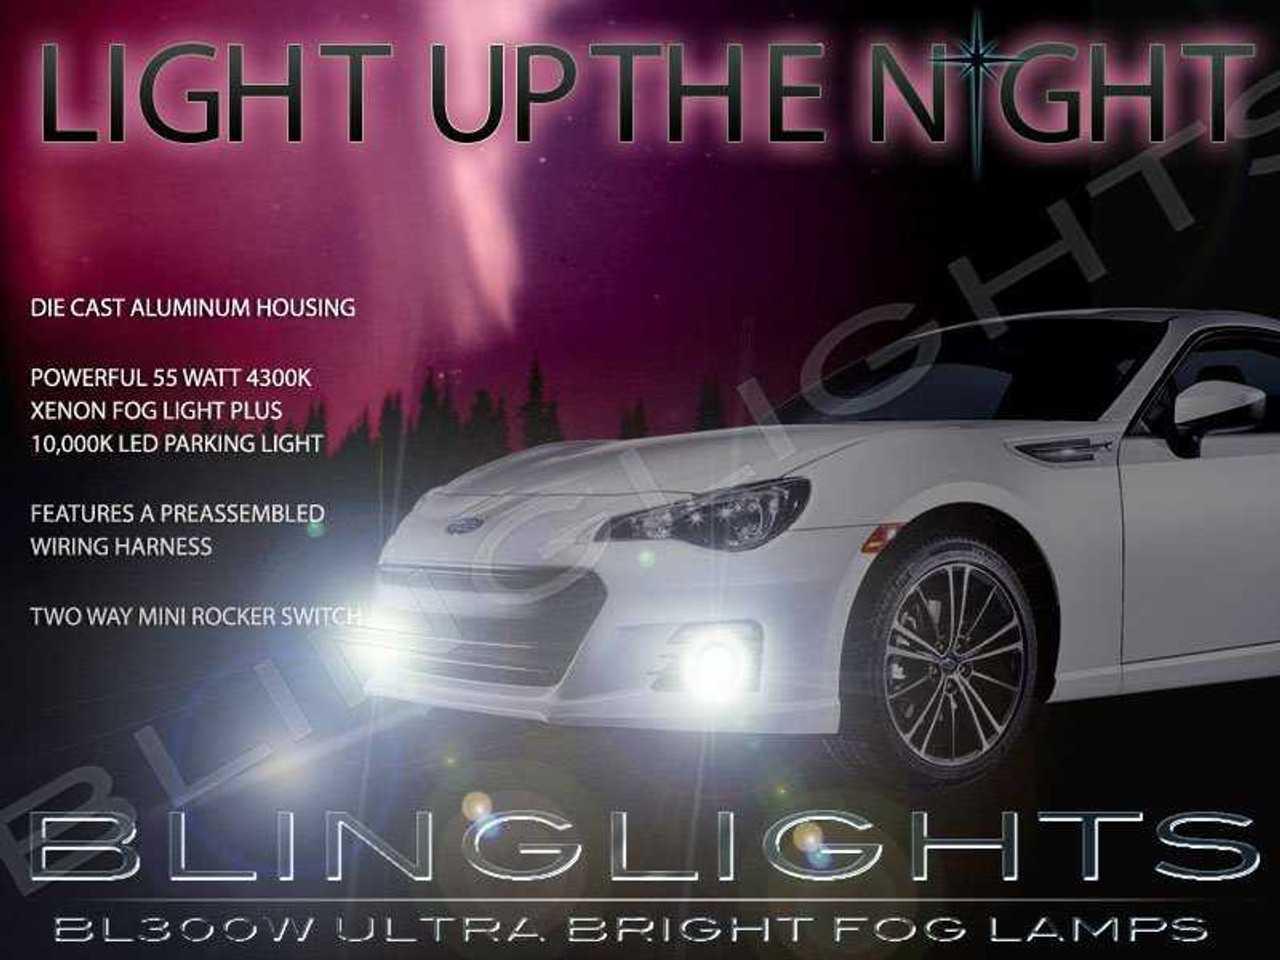 BlingLights Brand Fog Lights Lamps for 2013 2014 2015 2016 Subaru BRZ